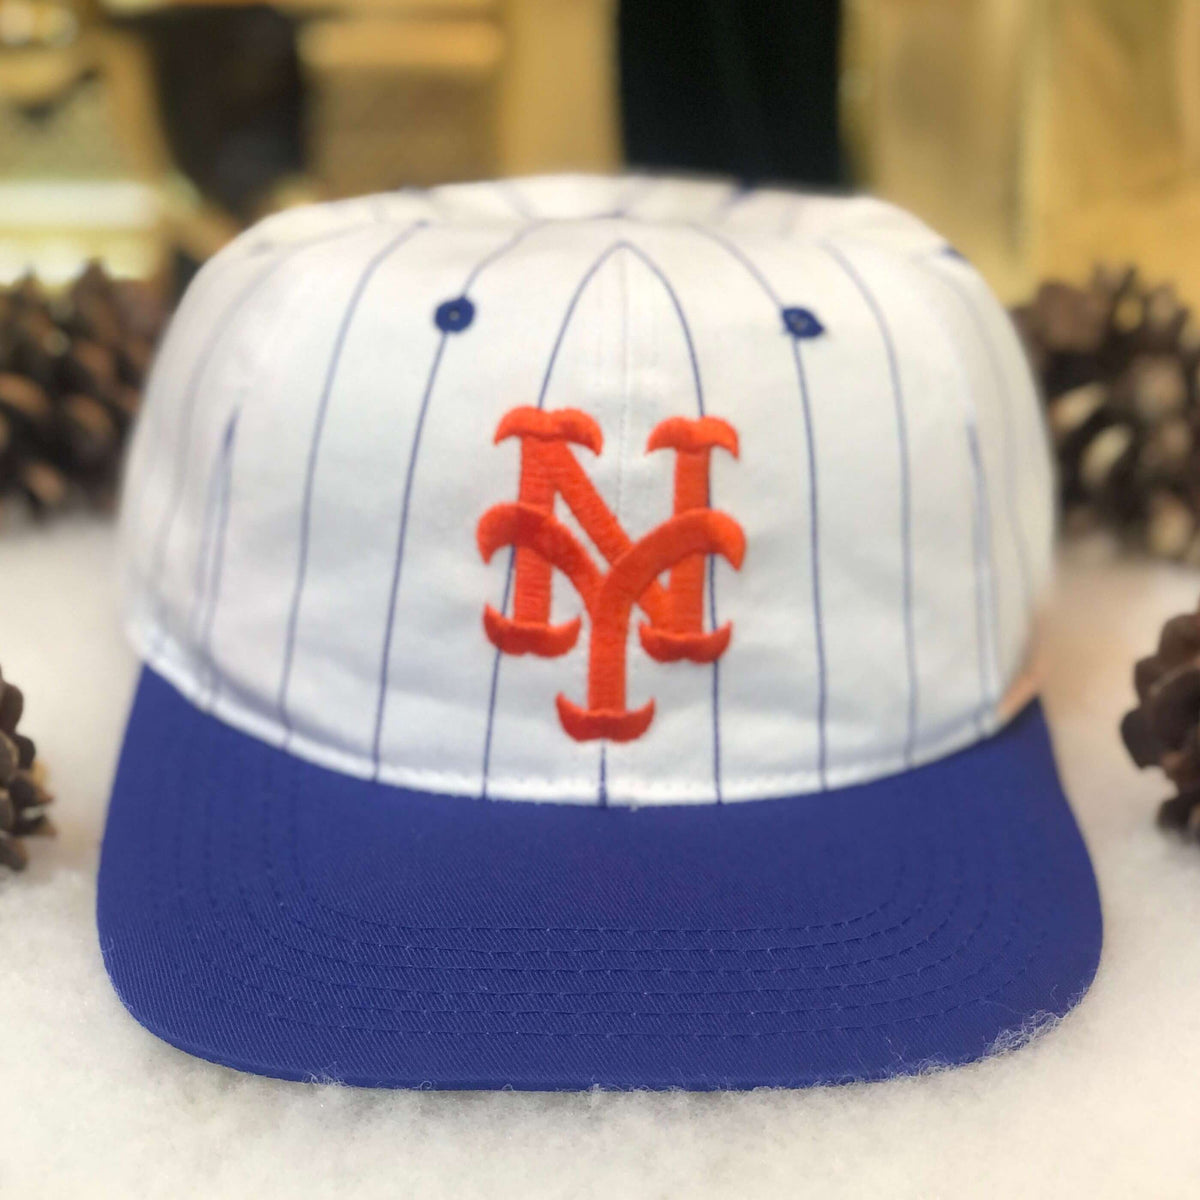 Vintage New York Mets MLB Pinstripe Jersey 